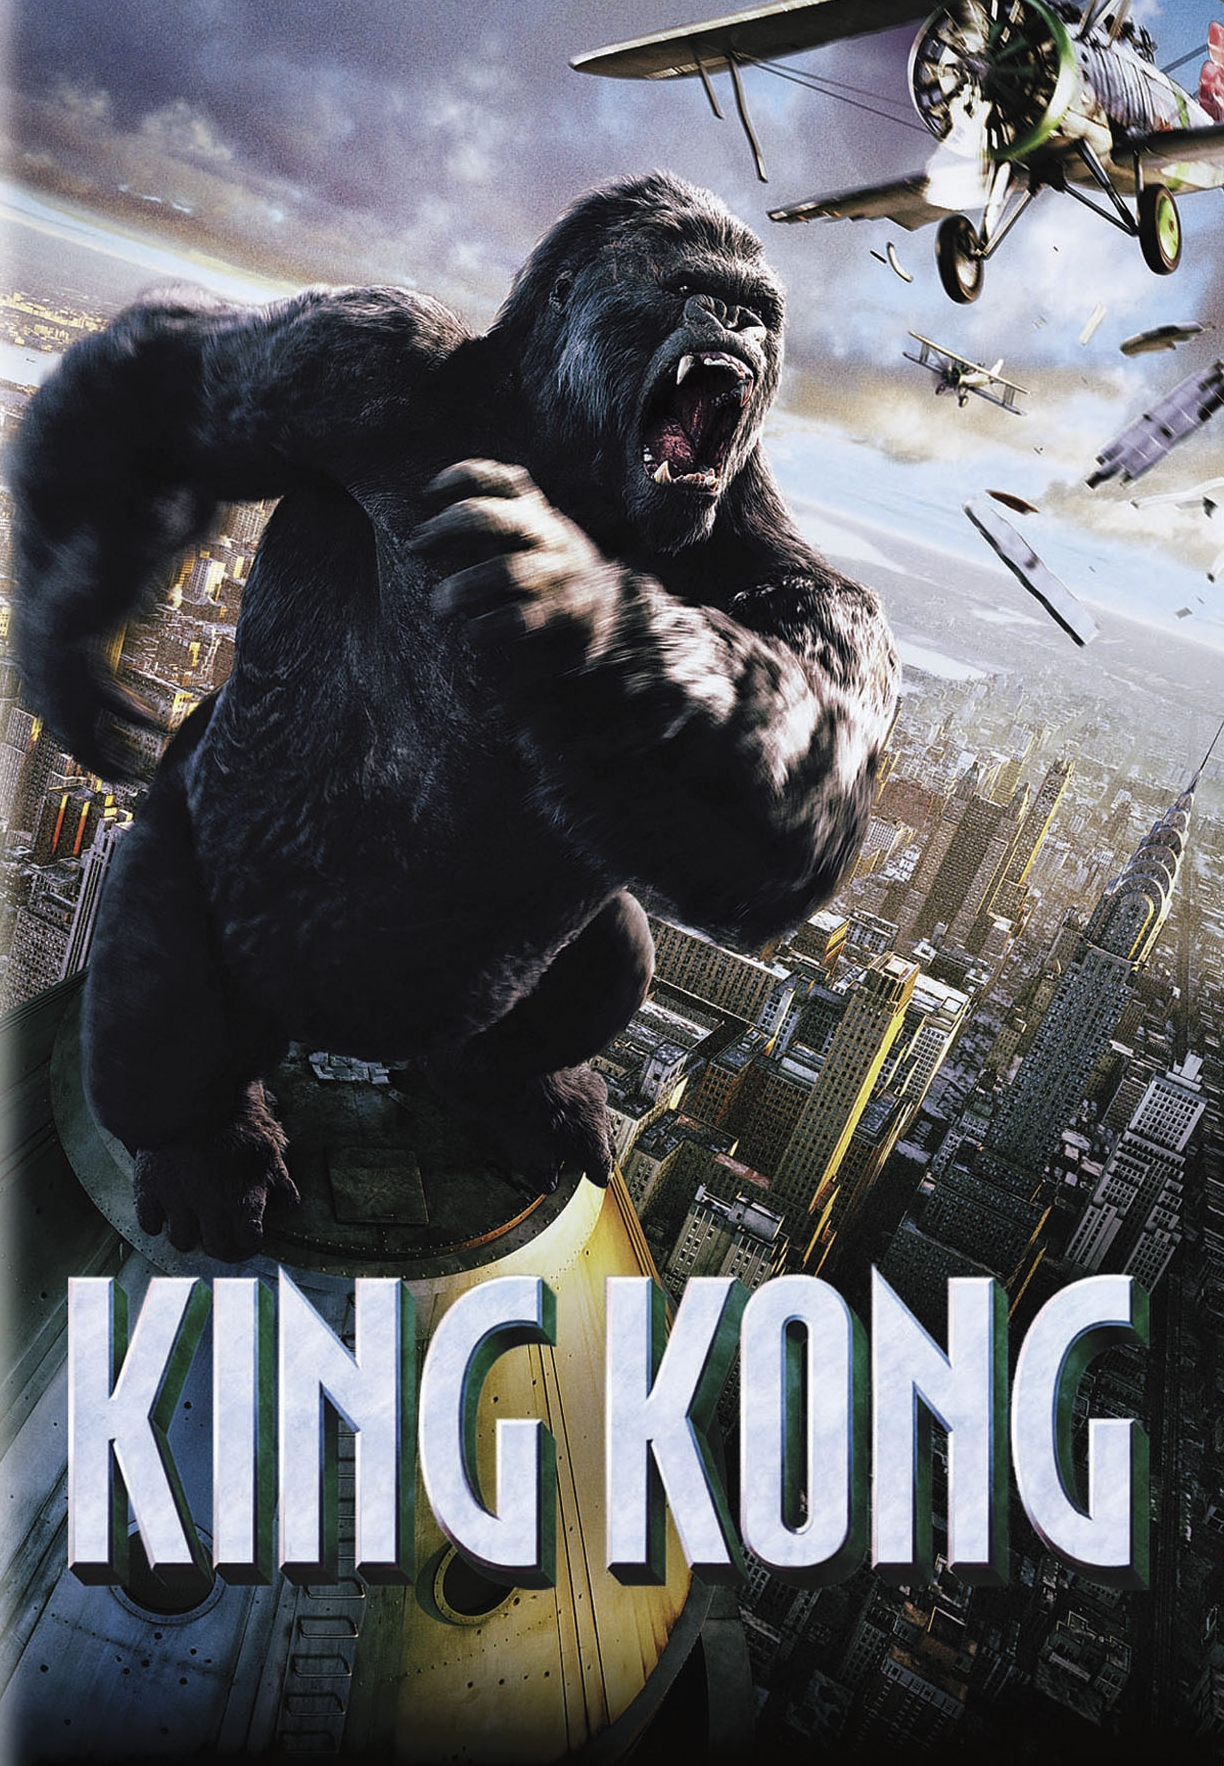 King Kong film 2005 - Wikipedia